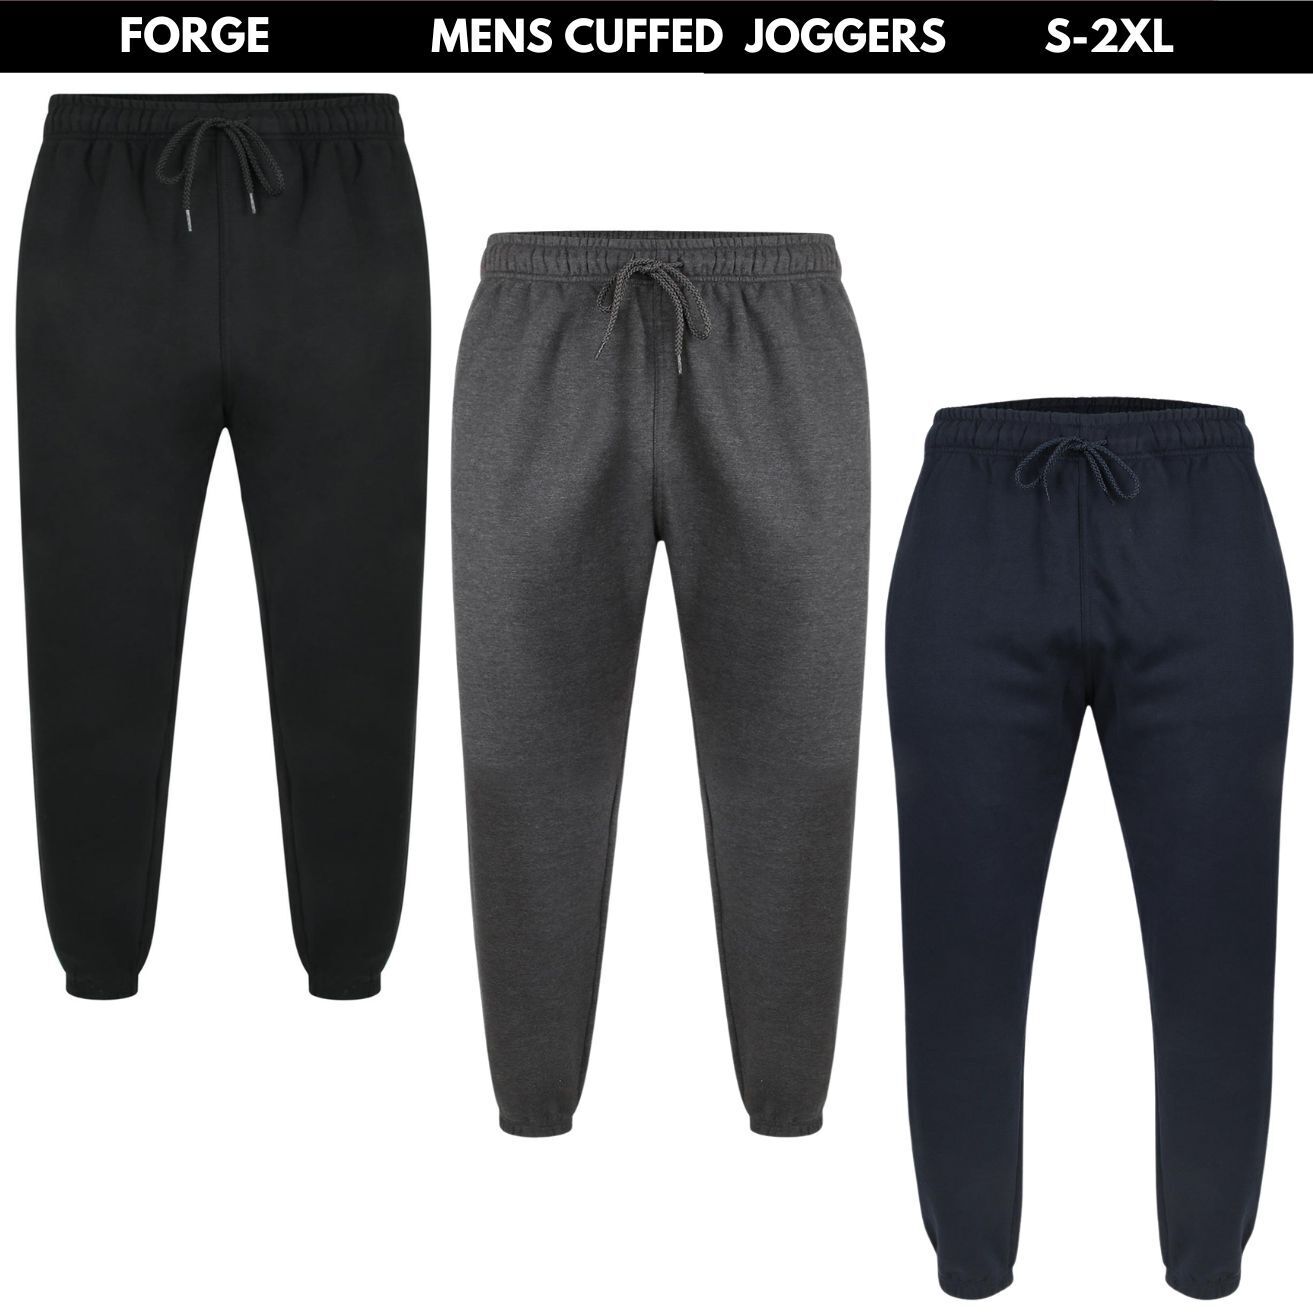 Mens Cuffed Joggers Elasticated Waist Jogging Bottoms Pants Zip Pockets S-2XL